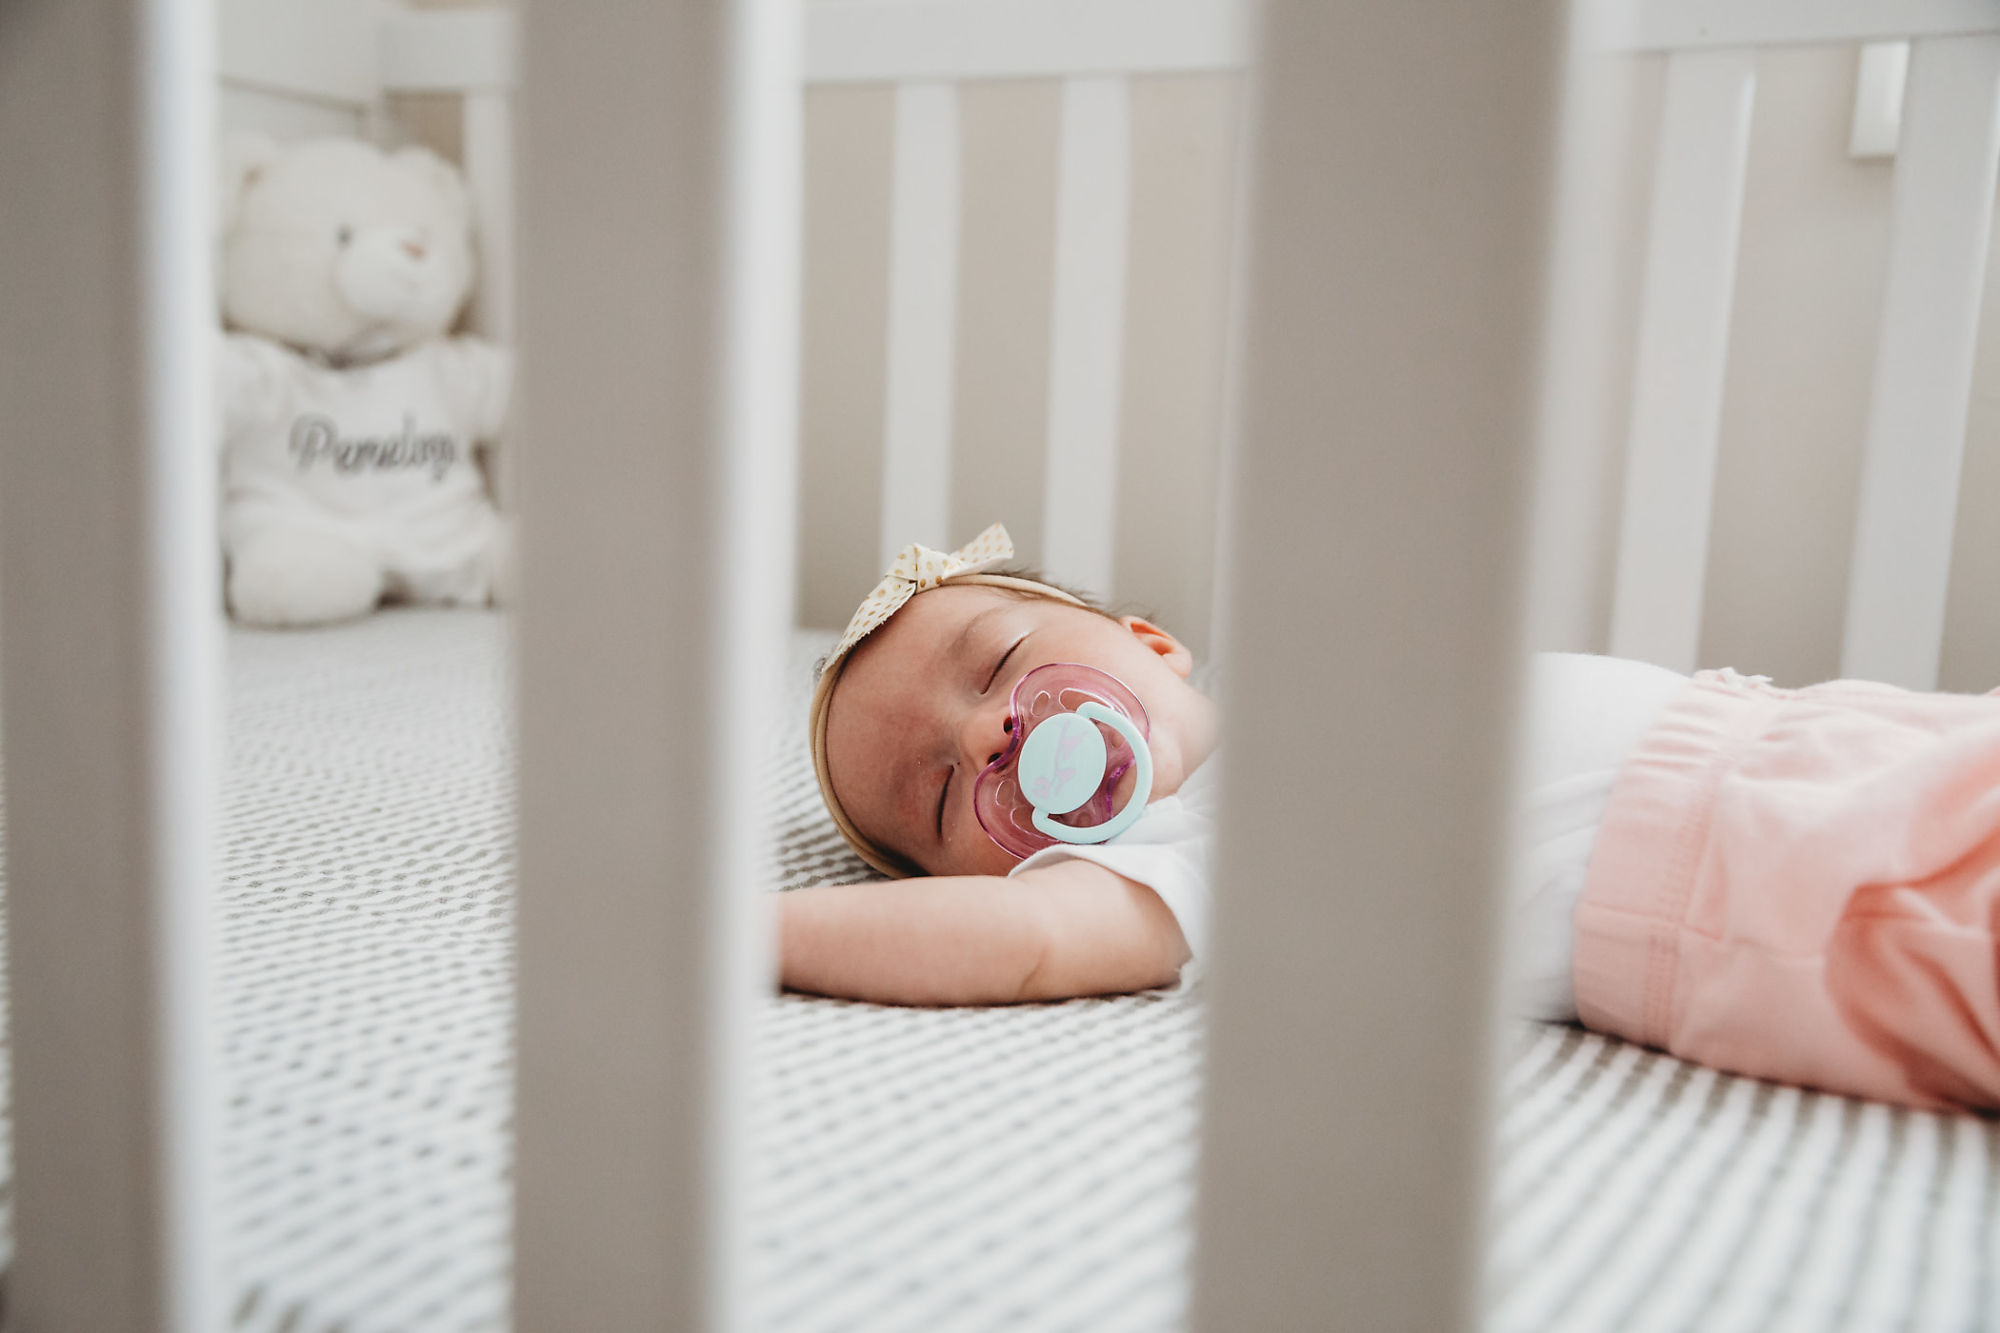 Lifestyle Hamilton Newborn Photographer Jennifer Blaak captures a sweet moment in the crib during this newborn photography session in Hamilton.